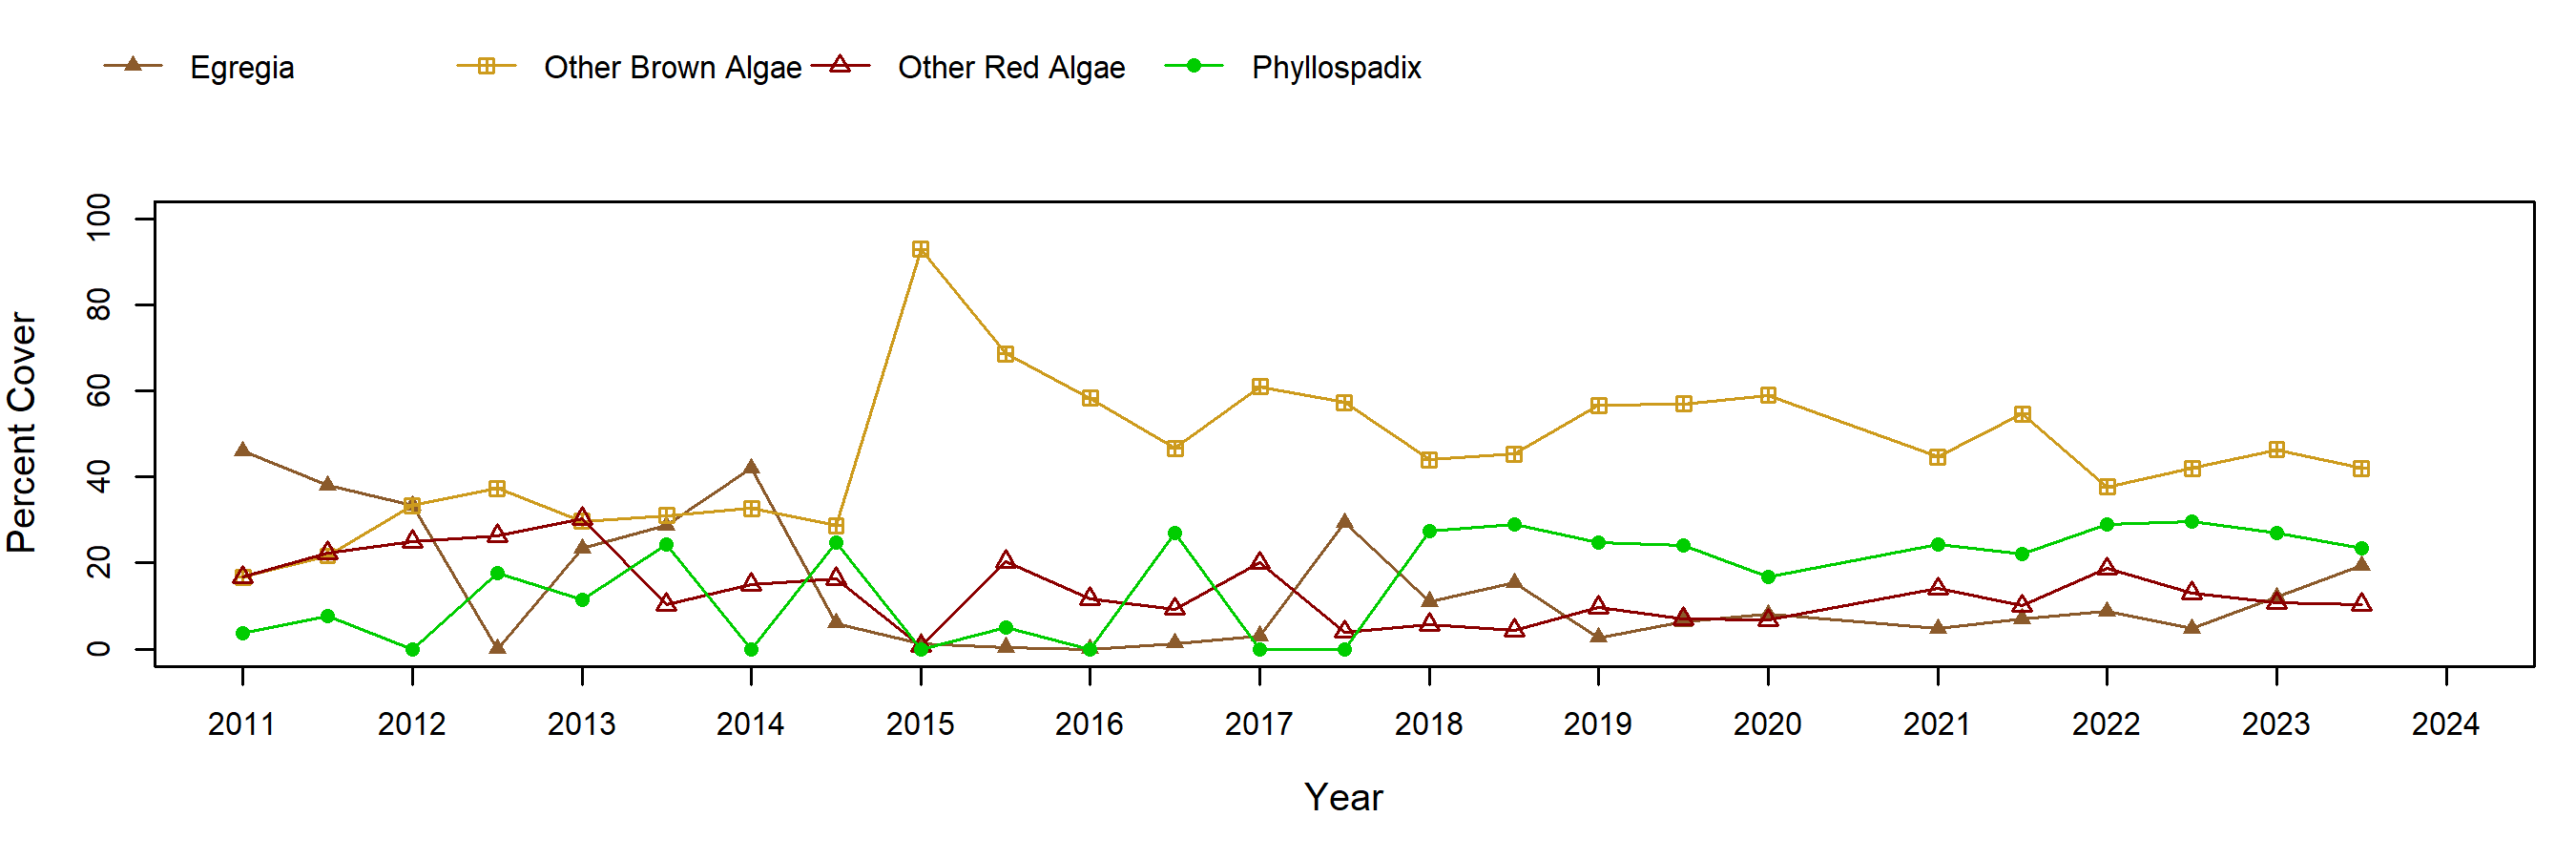 Boy Scout Camp Egregia trend plot